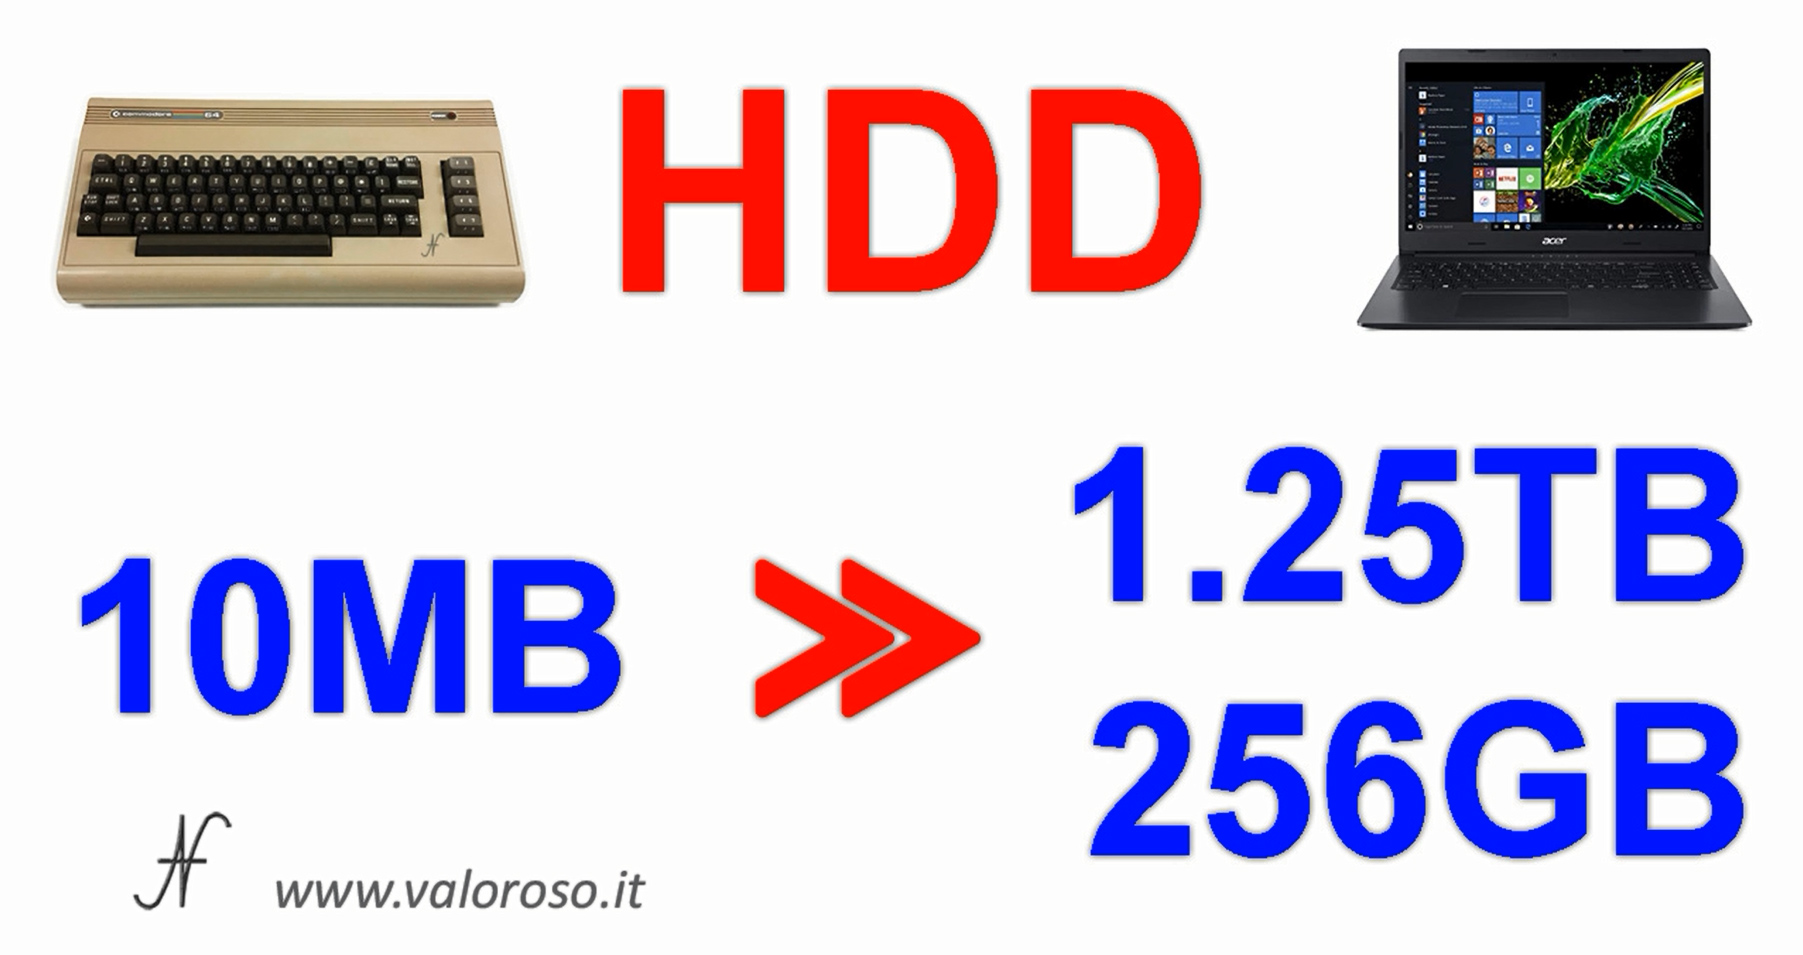 Commodore Vs PC moderno, confronto capacità HDD hard disk SSD, MByte, TByte